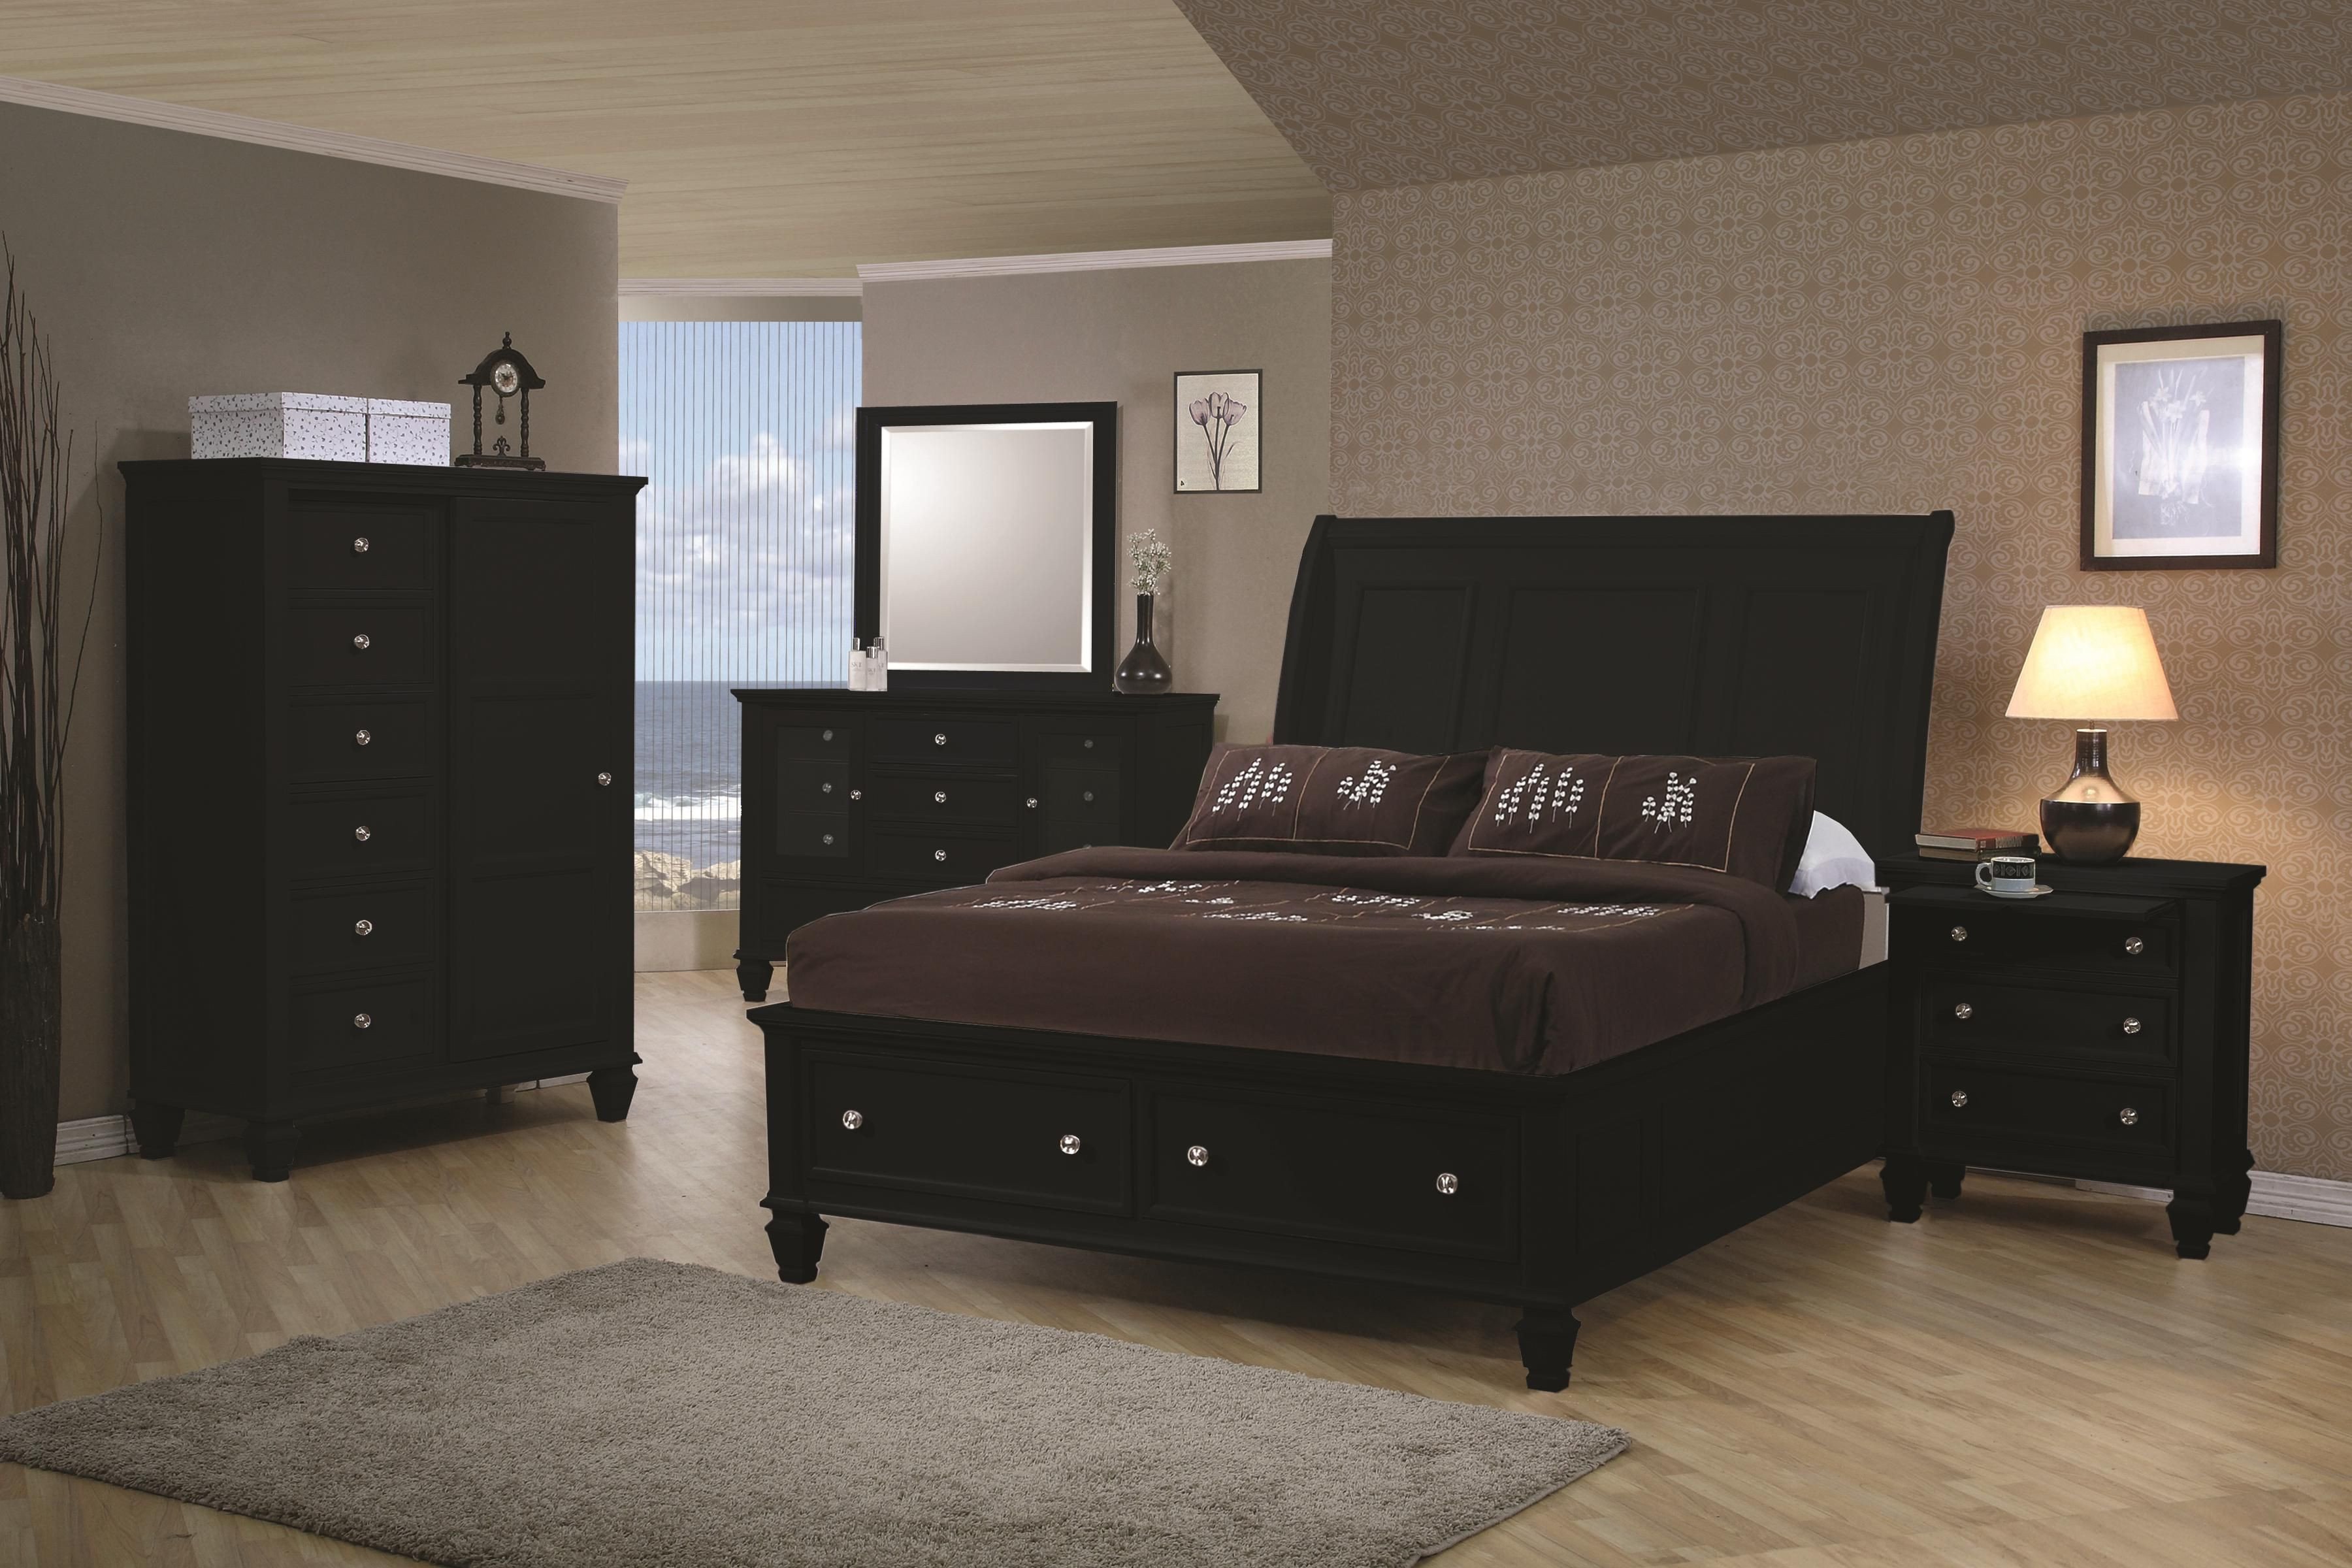 wood and black bedroom furniture